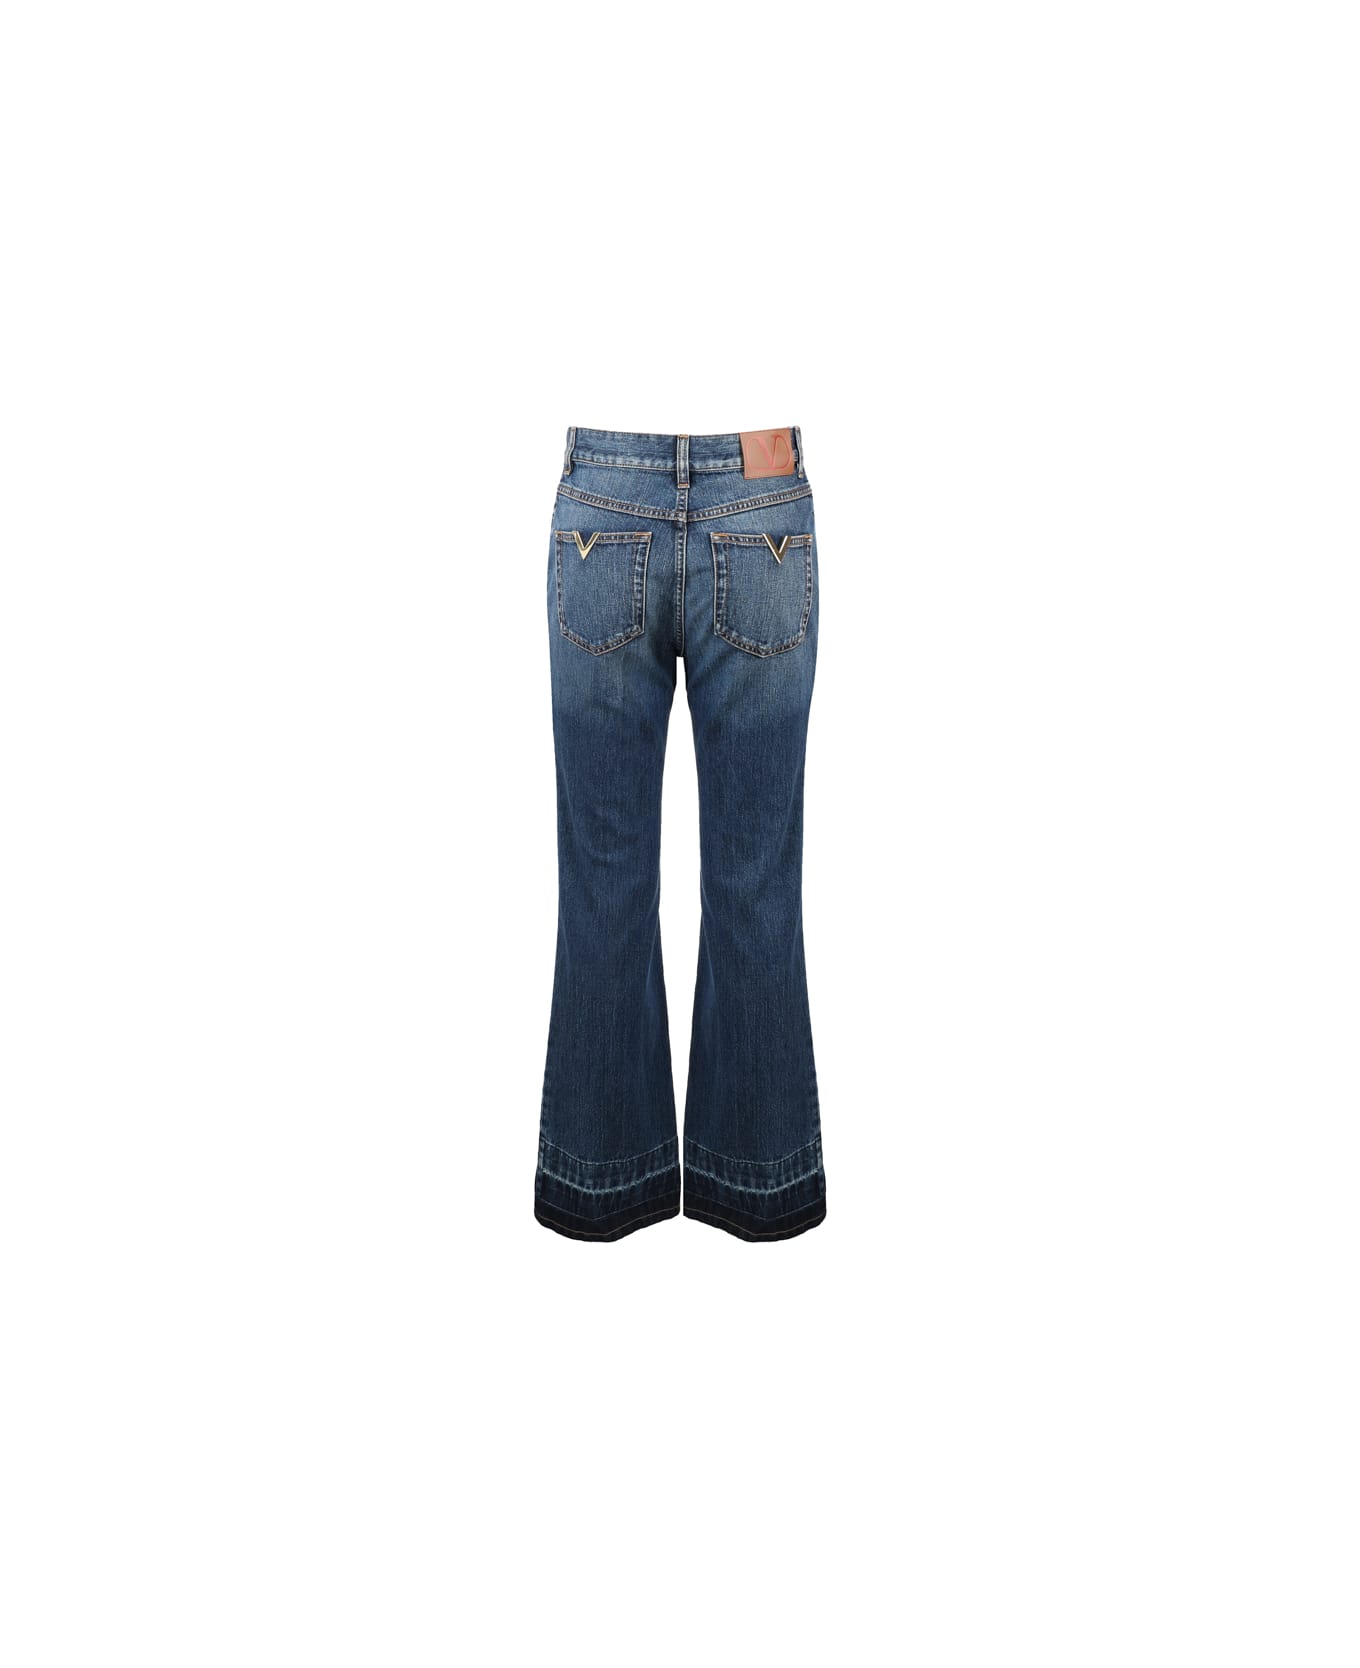 Valentino Bootcut Jeans In Cotton Denim - Medium blue denim